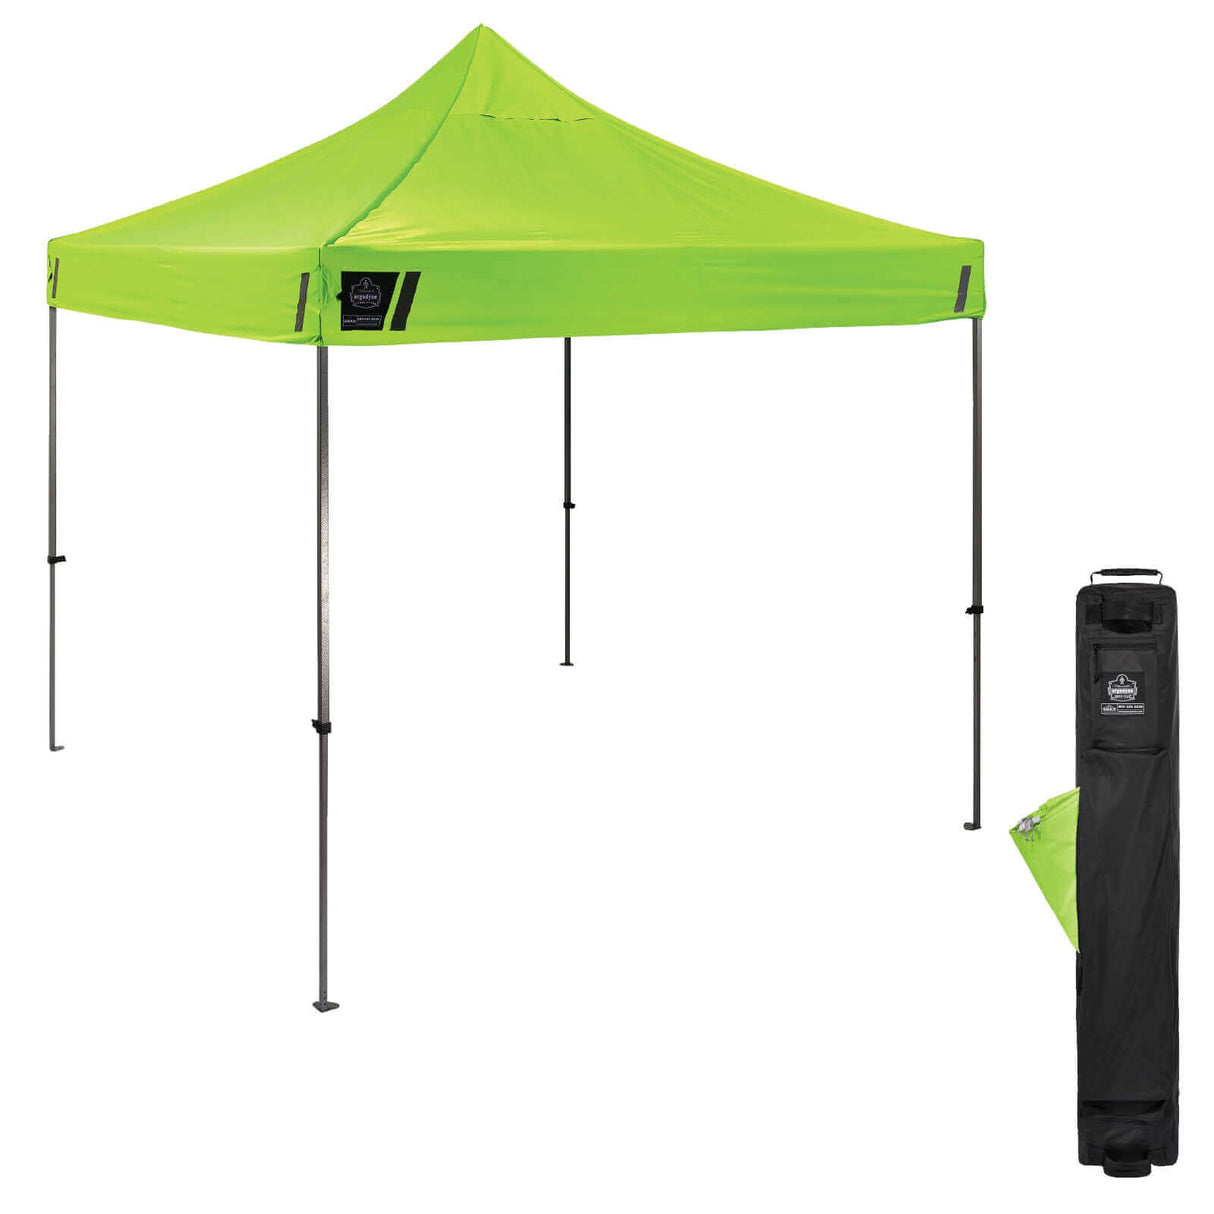 Ergodyne SHAX 6000 Heavy-Duty Pop-Up Tent, 10ft x 10ft